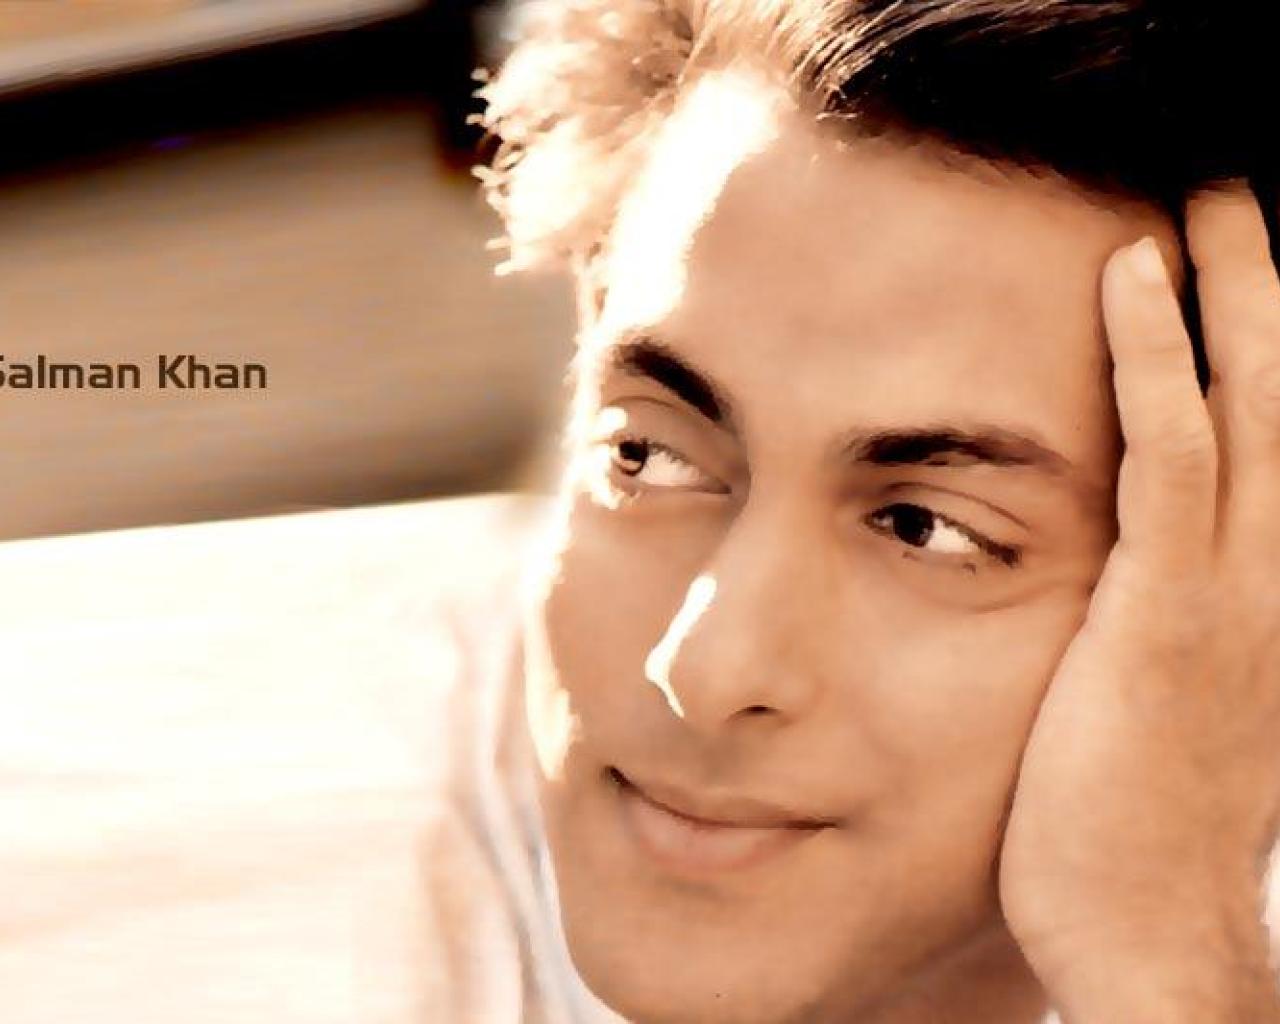 Salman khan young hd pics - Free hd wallpapers